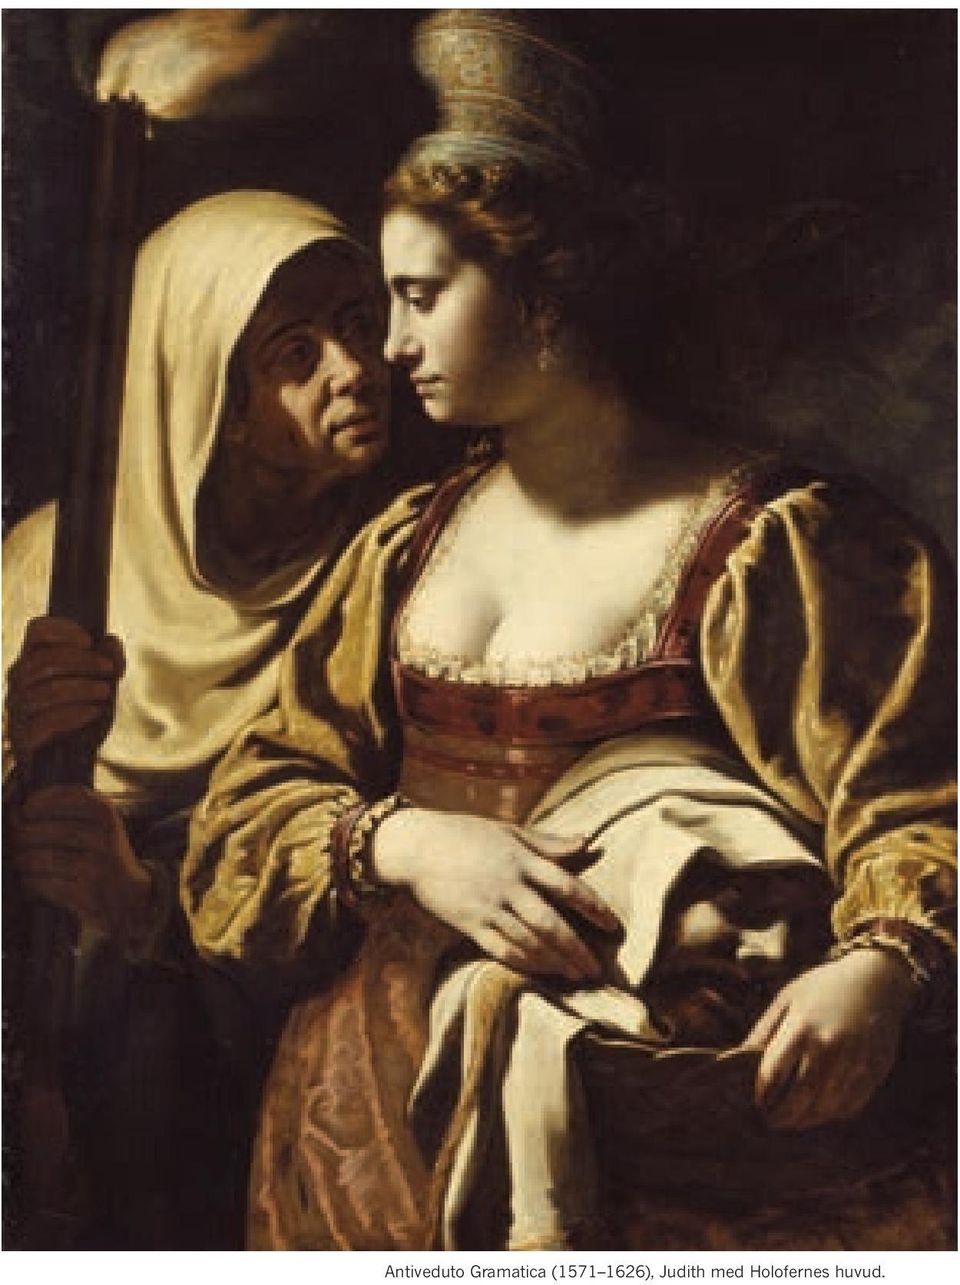 1626), Judith